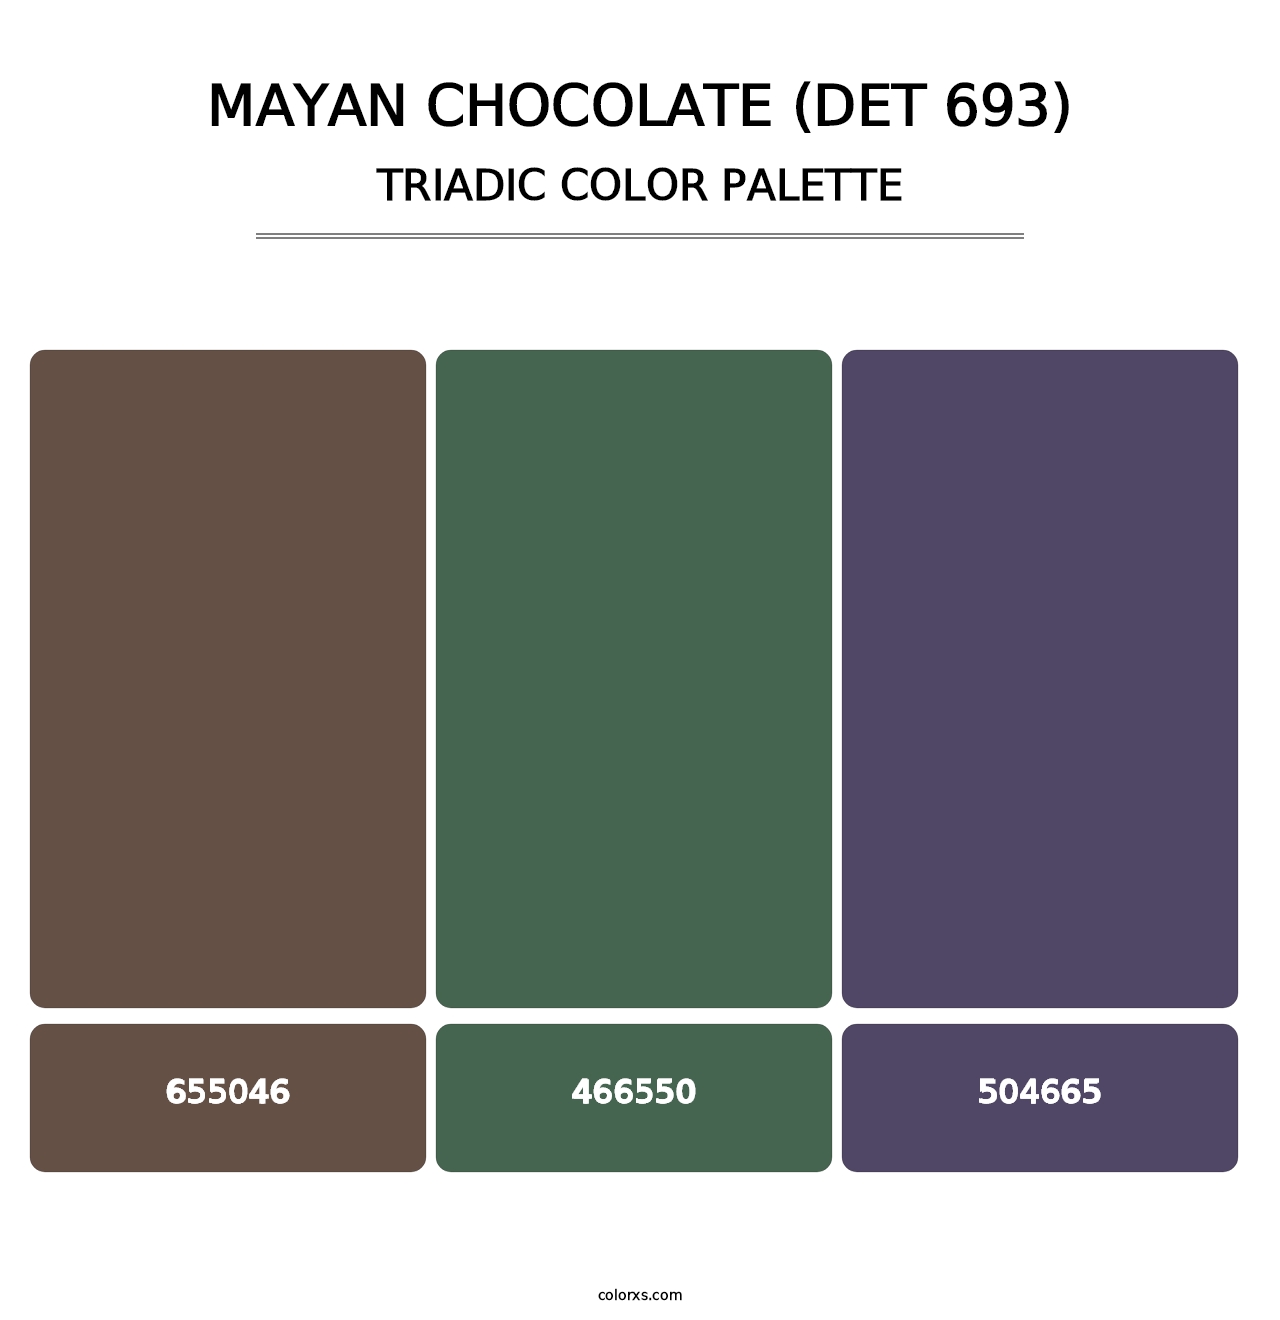 Mayan Chocolate (DET 693) - Triadic Color Palette